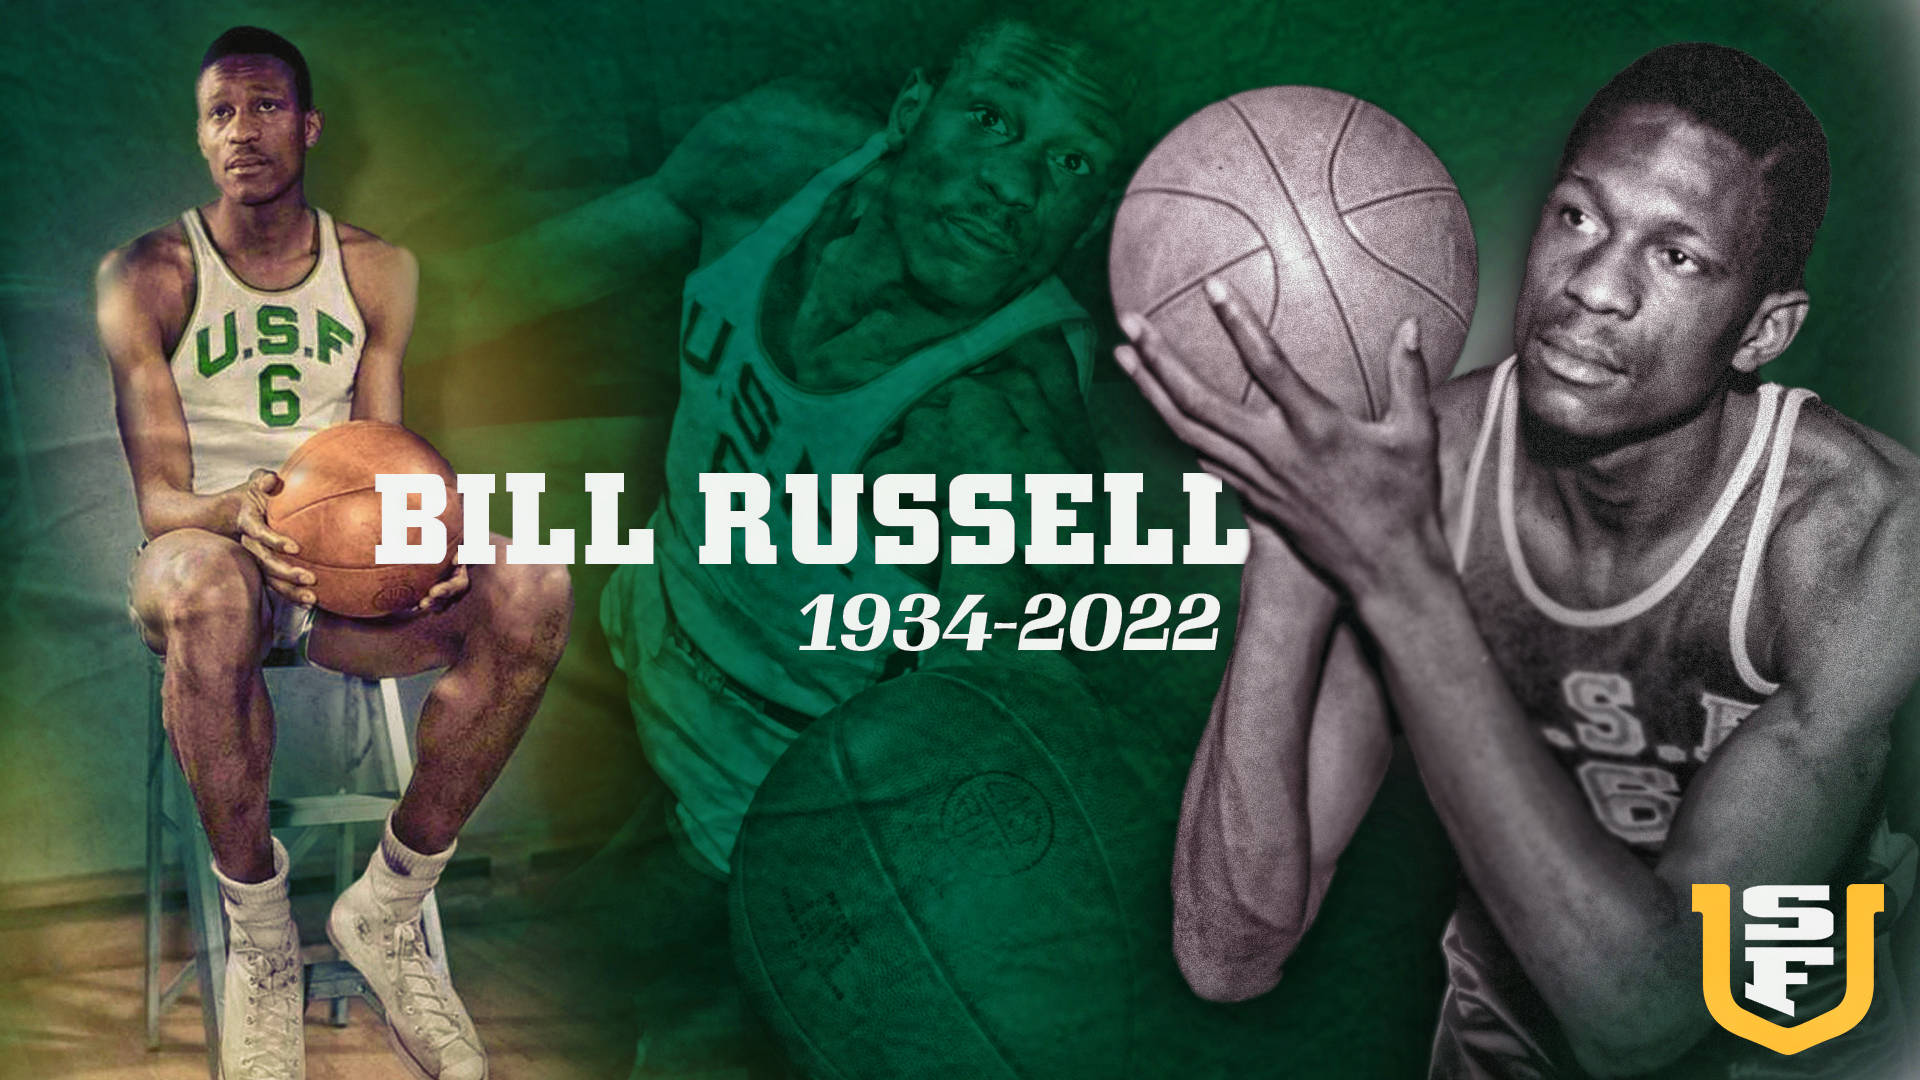 Bill Russell 1920 X 1080 Wallpaper